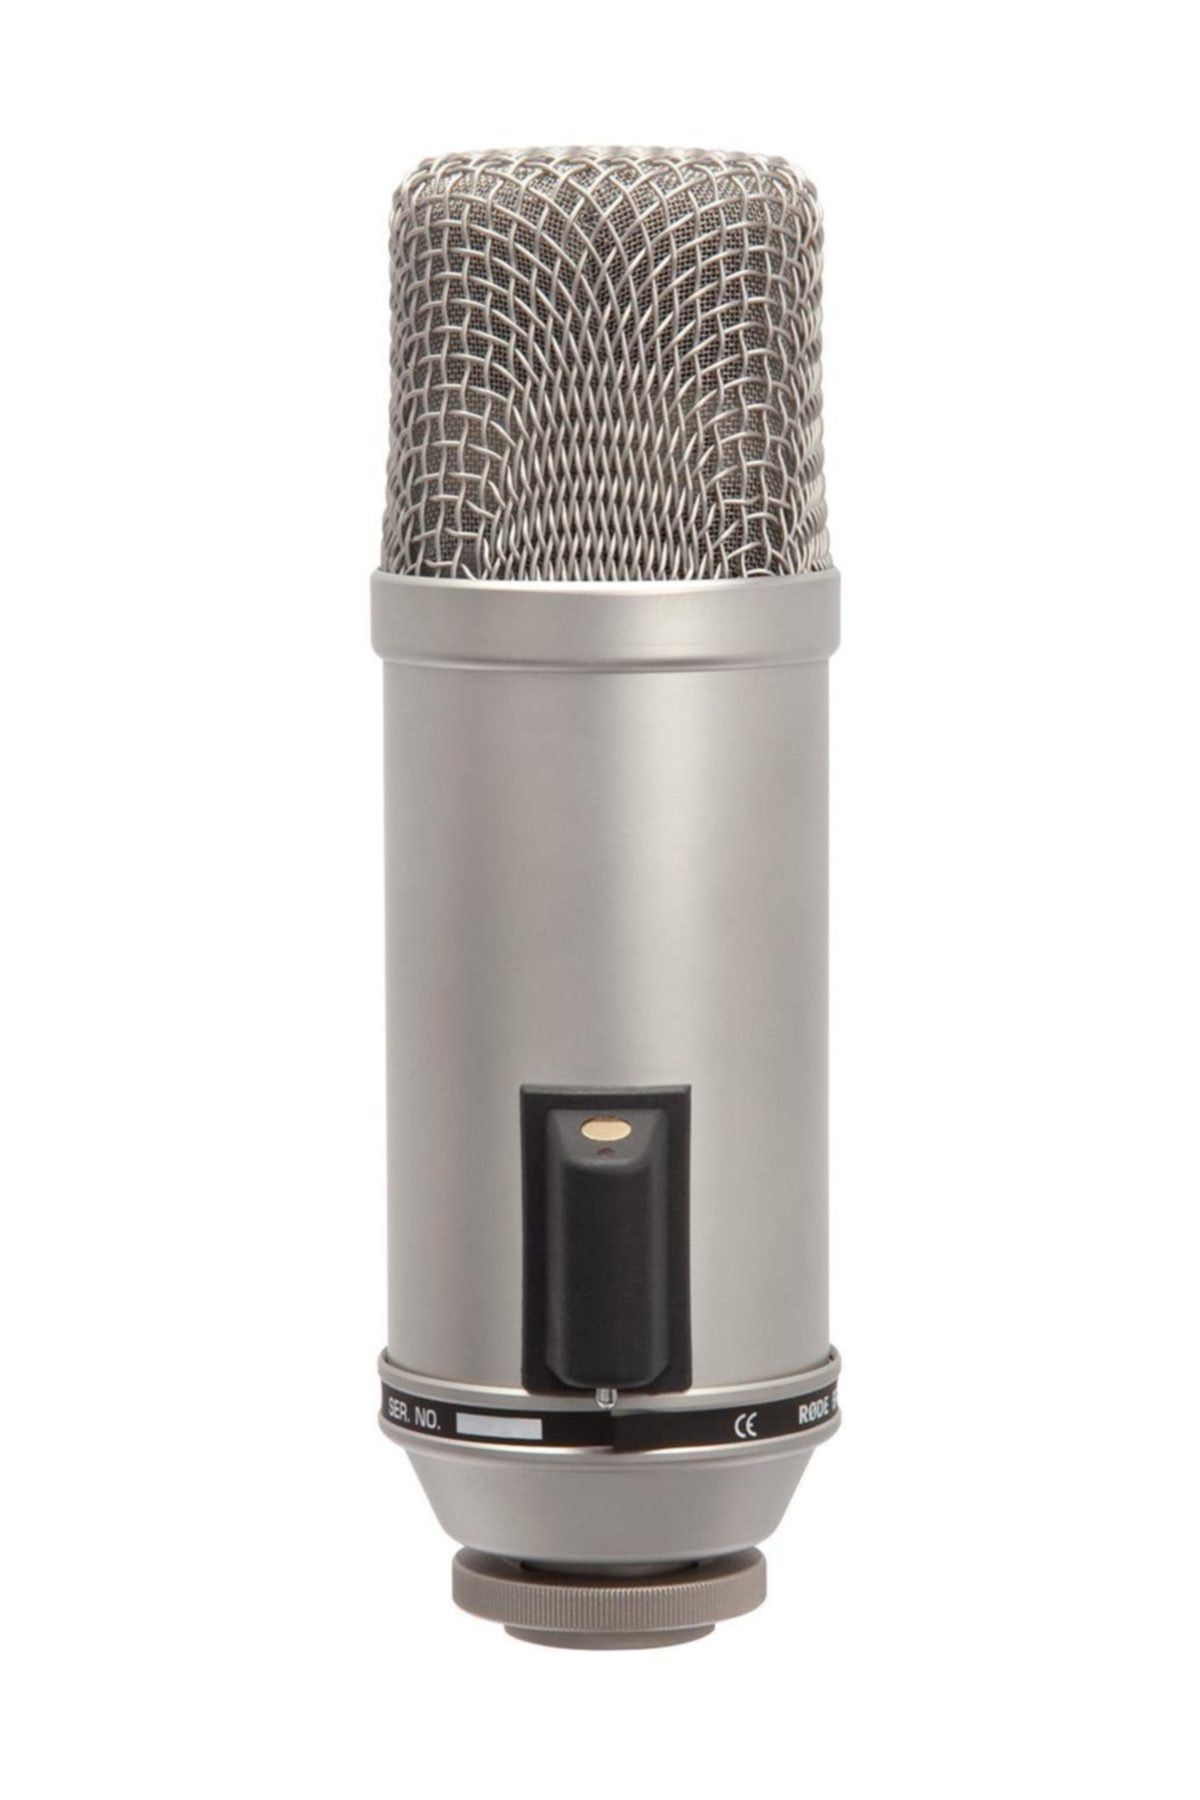 Rode Broadcaster Mikrofon